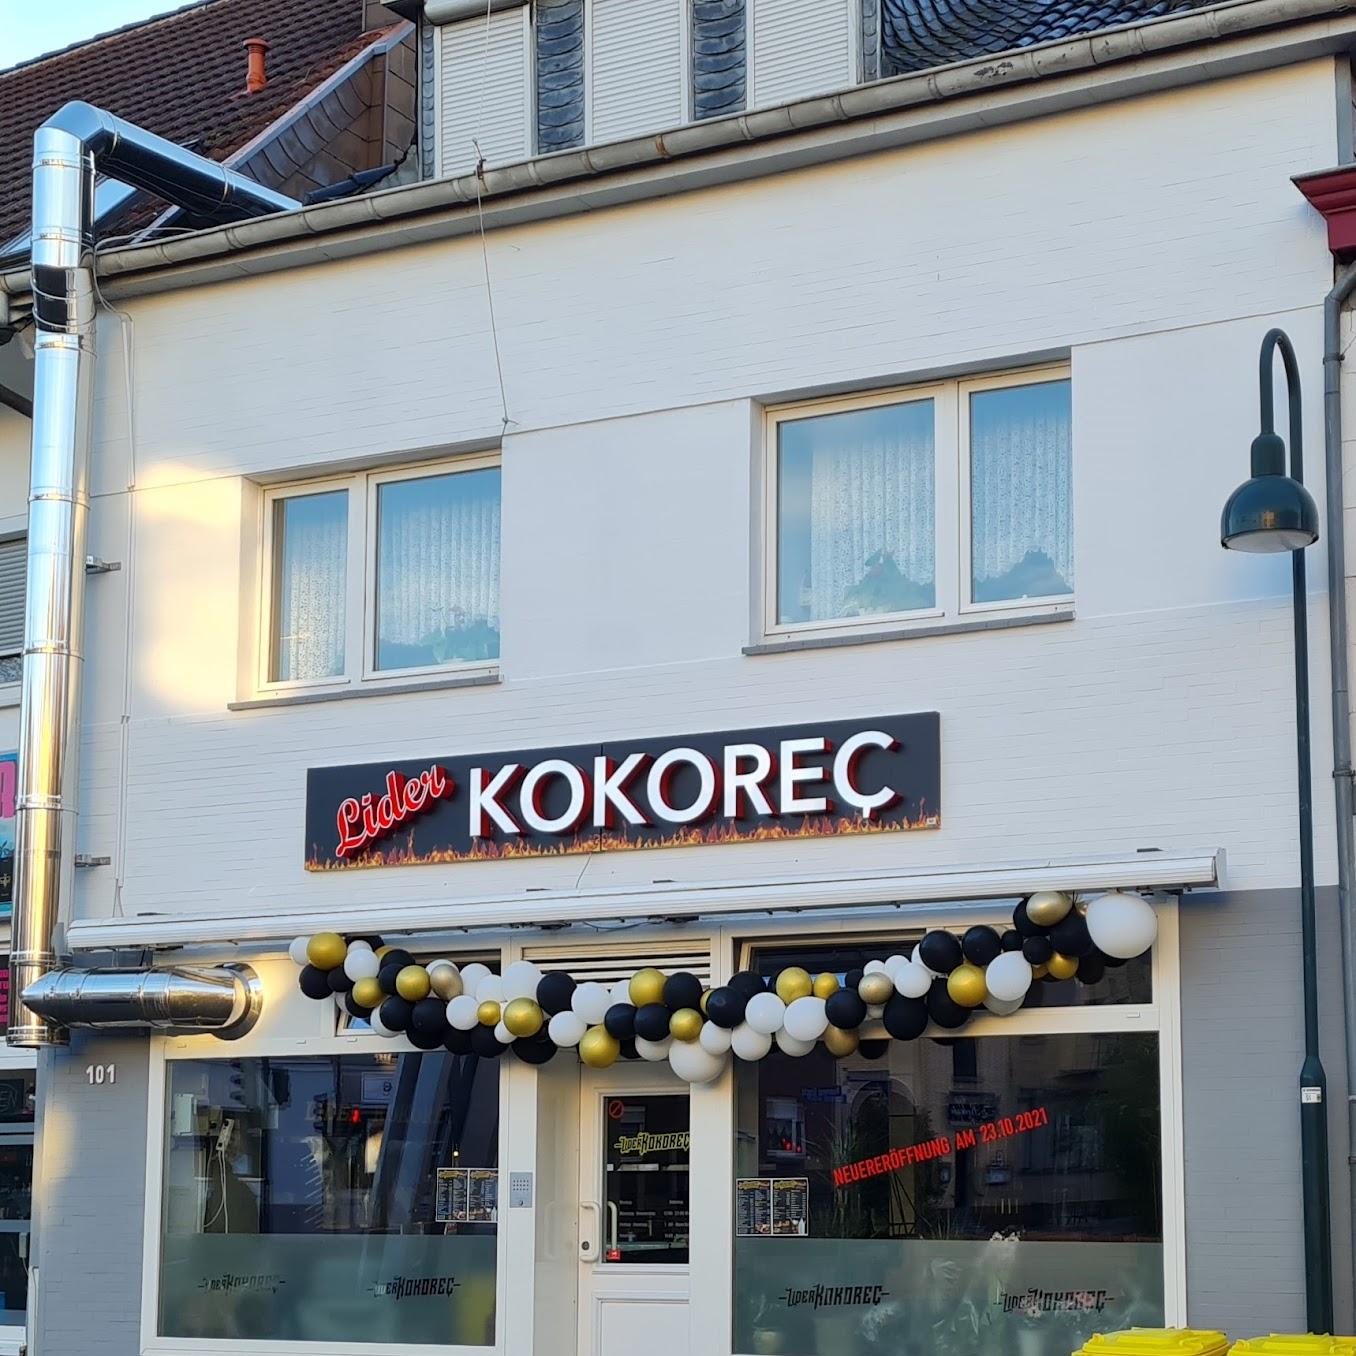 Restaurant "Lider Kokoreç Aachen" in Aachen